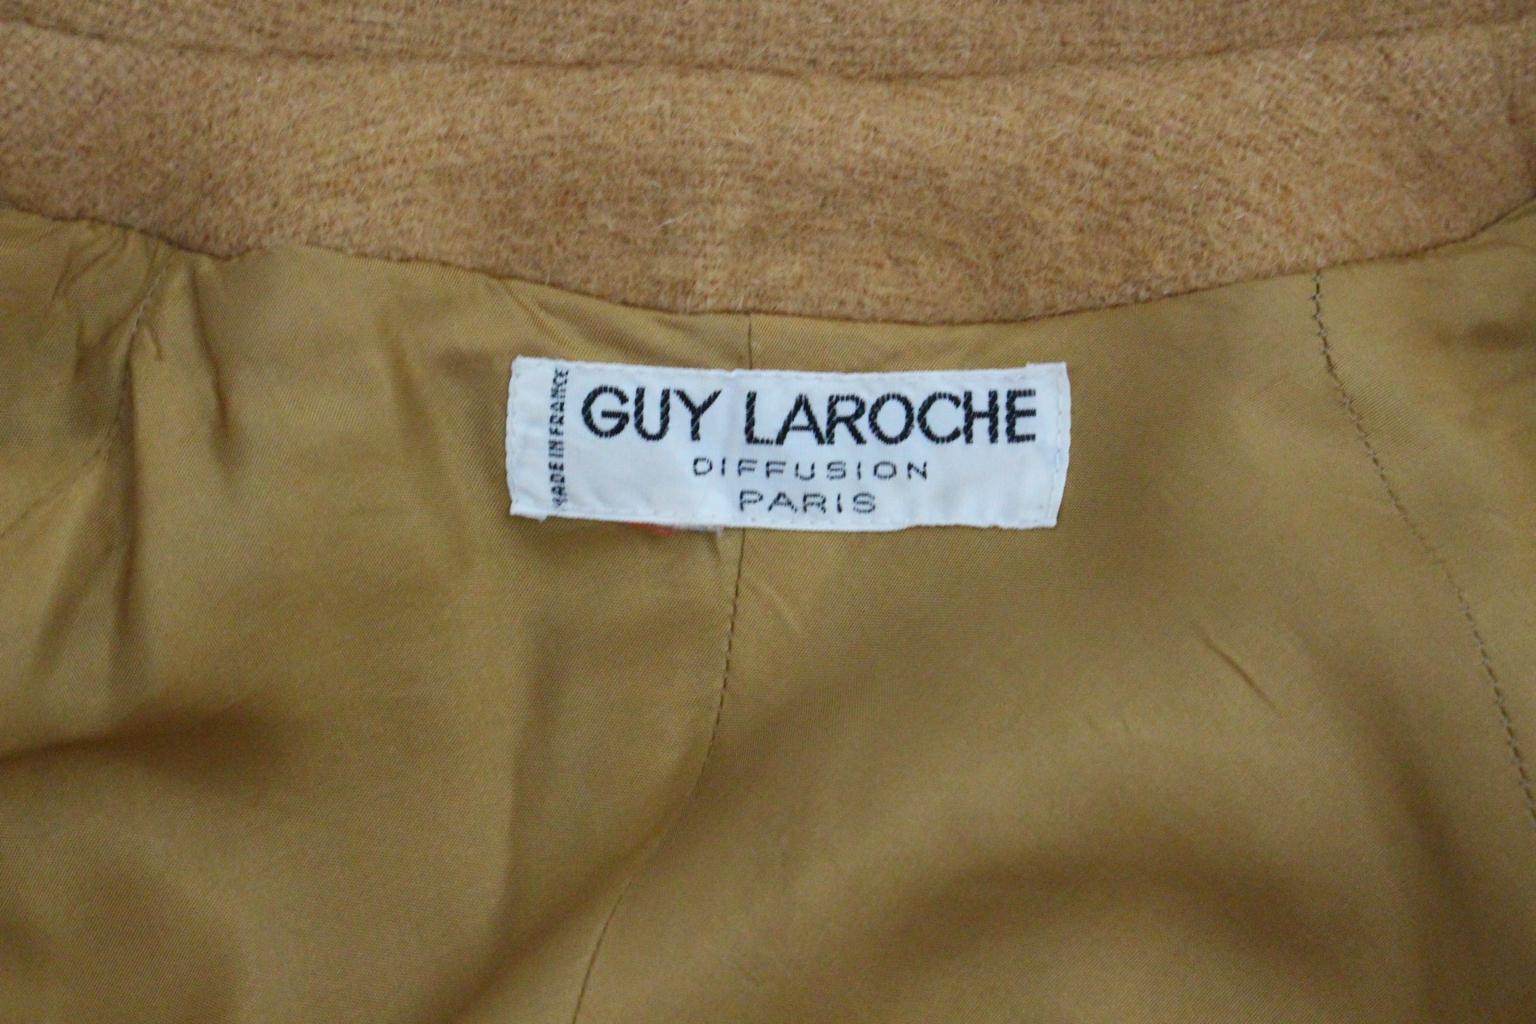 Guy Laroche Diffusion Paris Vintage Wool Coat 1970s For Sale 10